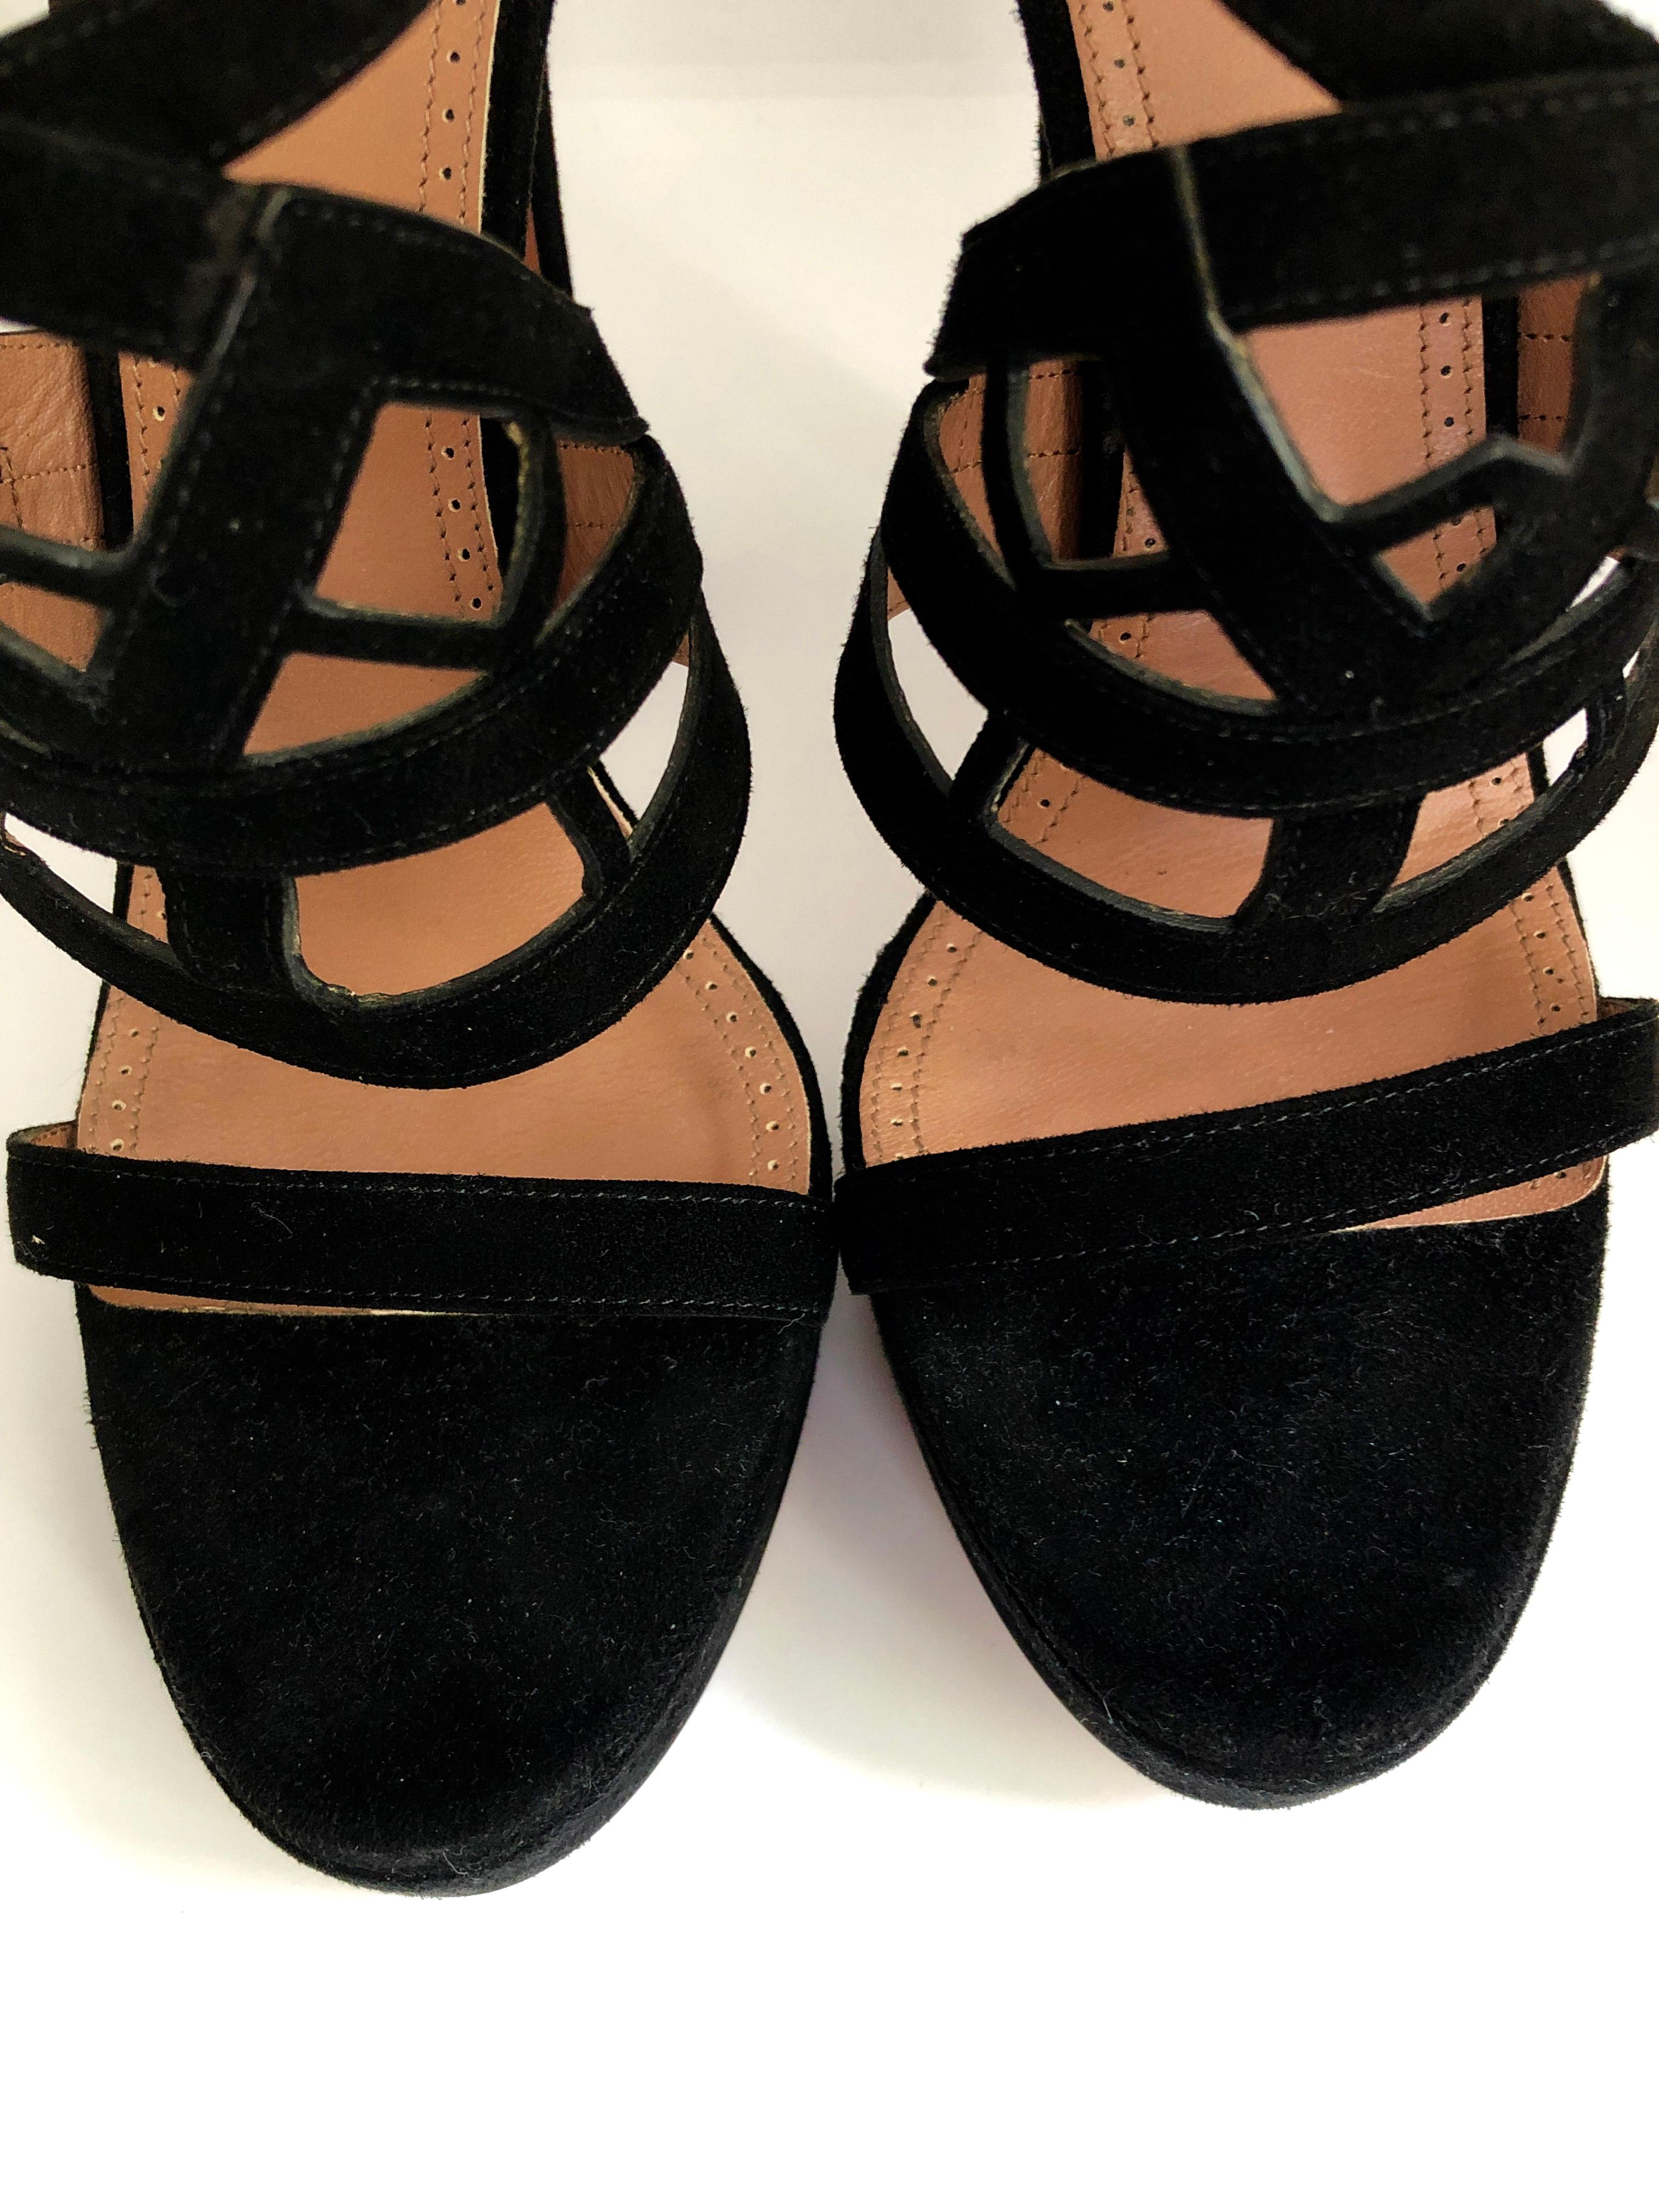 Pair of Alaïa Black Laser Cut Lattice Strap Suede Leather Stiletto Heel Sandals For Sale 4